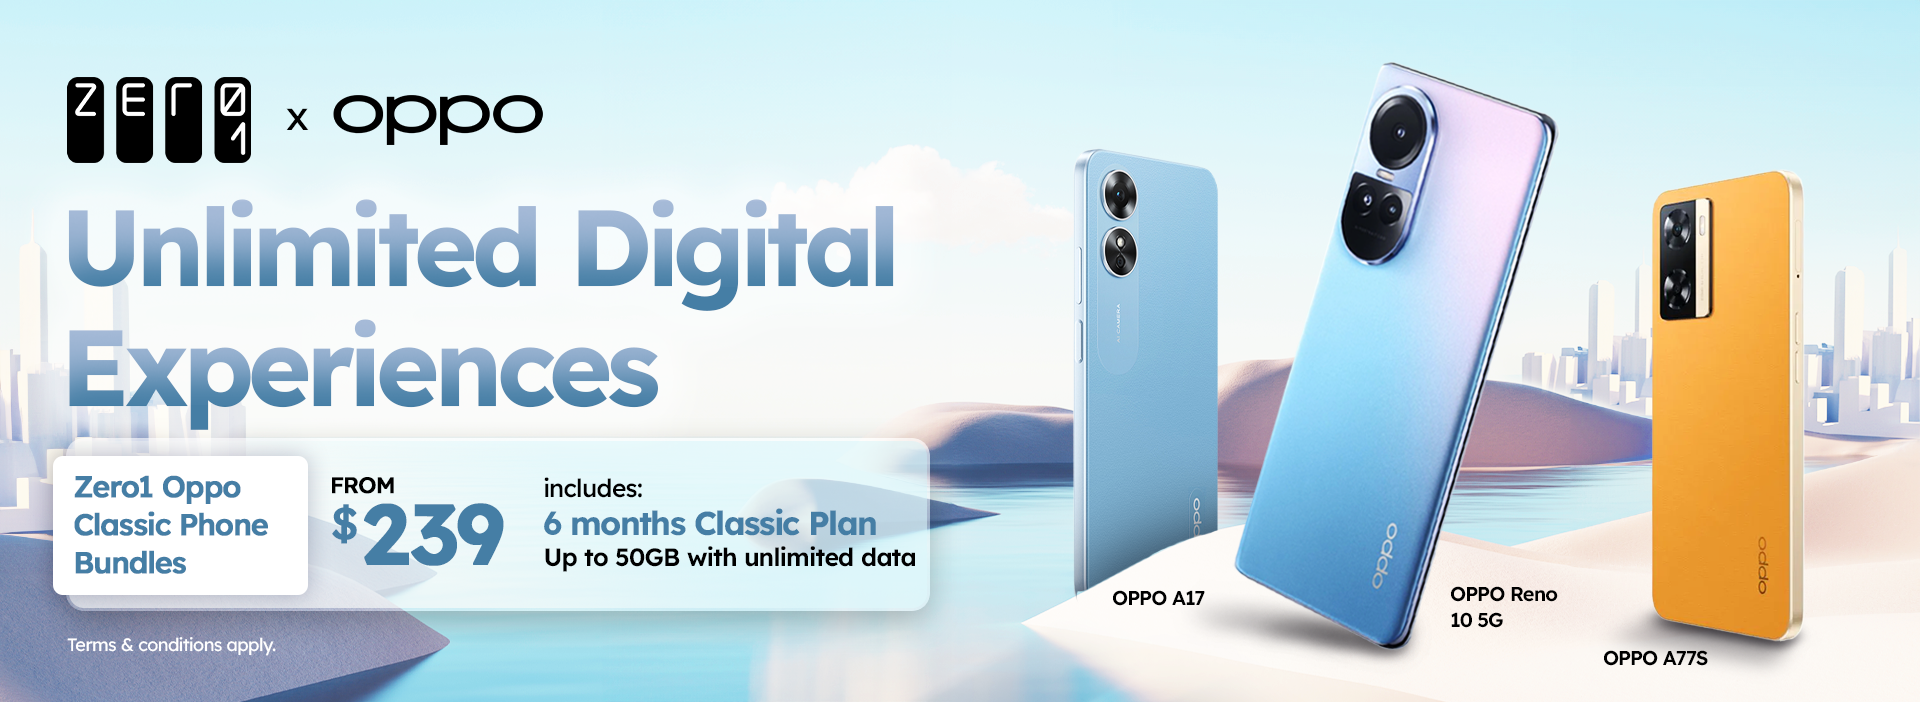 OPPO Classic Phone Bundles Classic Plan - OPPO reno 10 5g - A77s - A17k